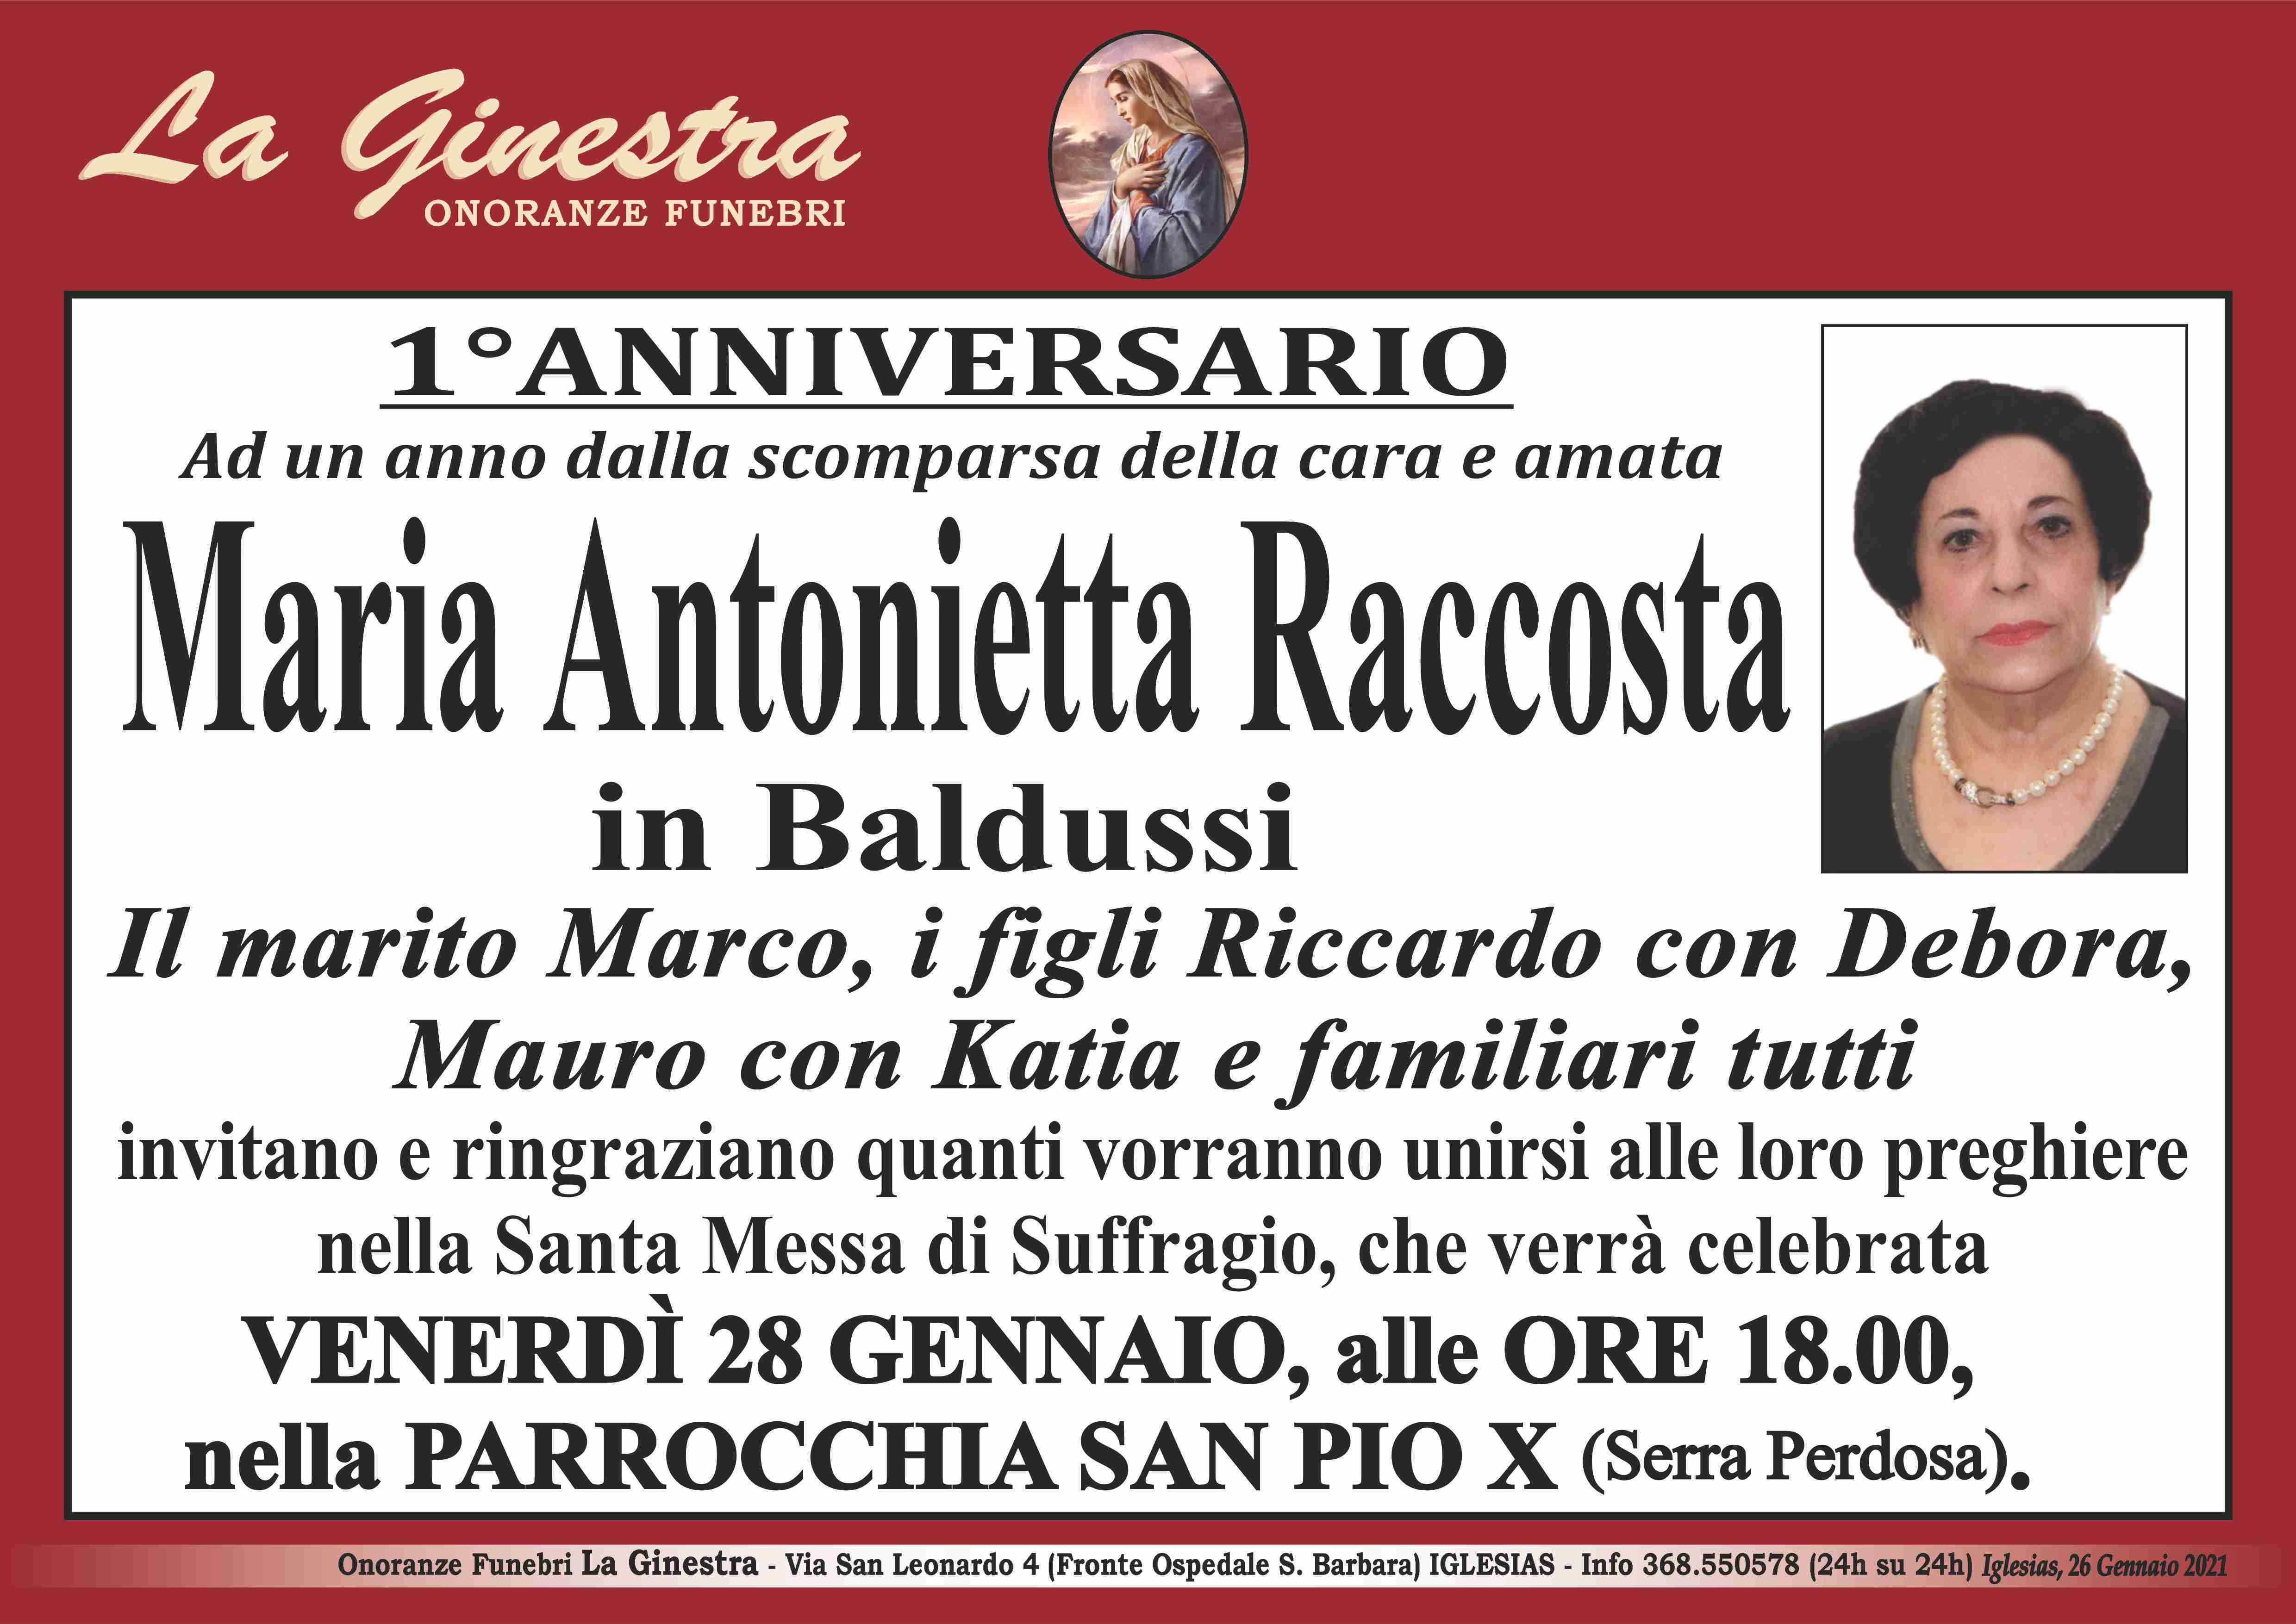 Maria Antonietta Raccosta